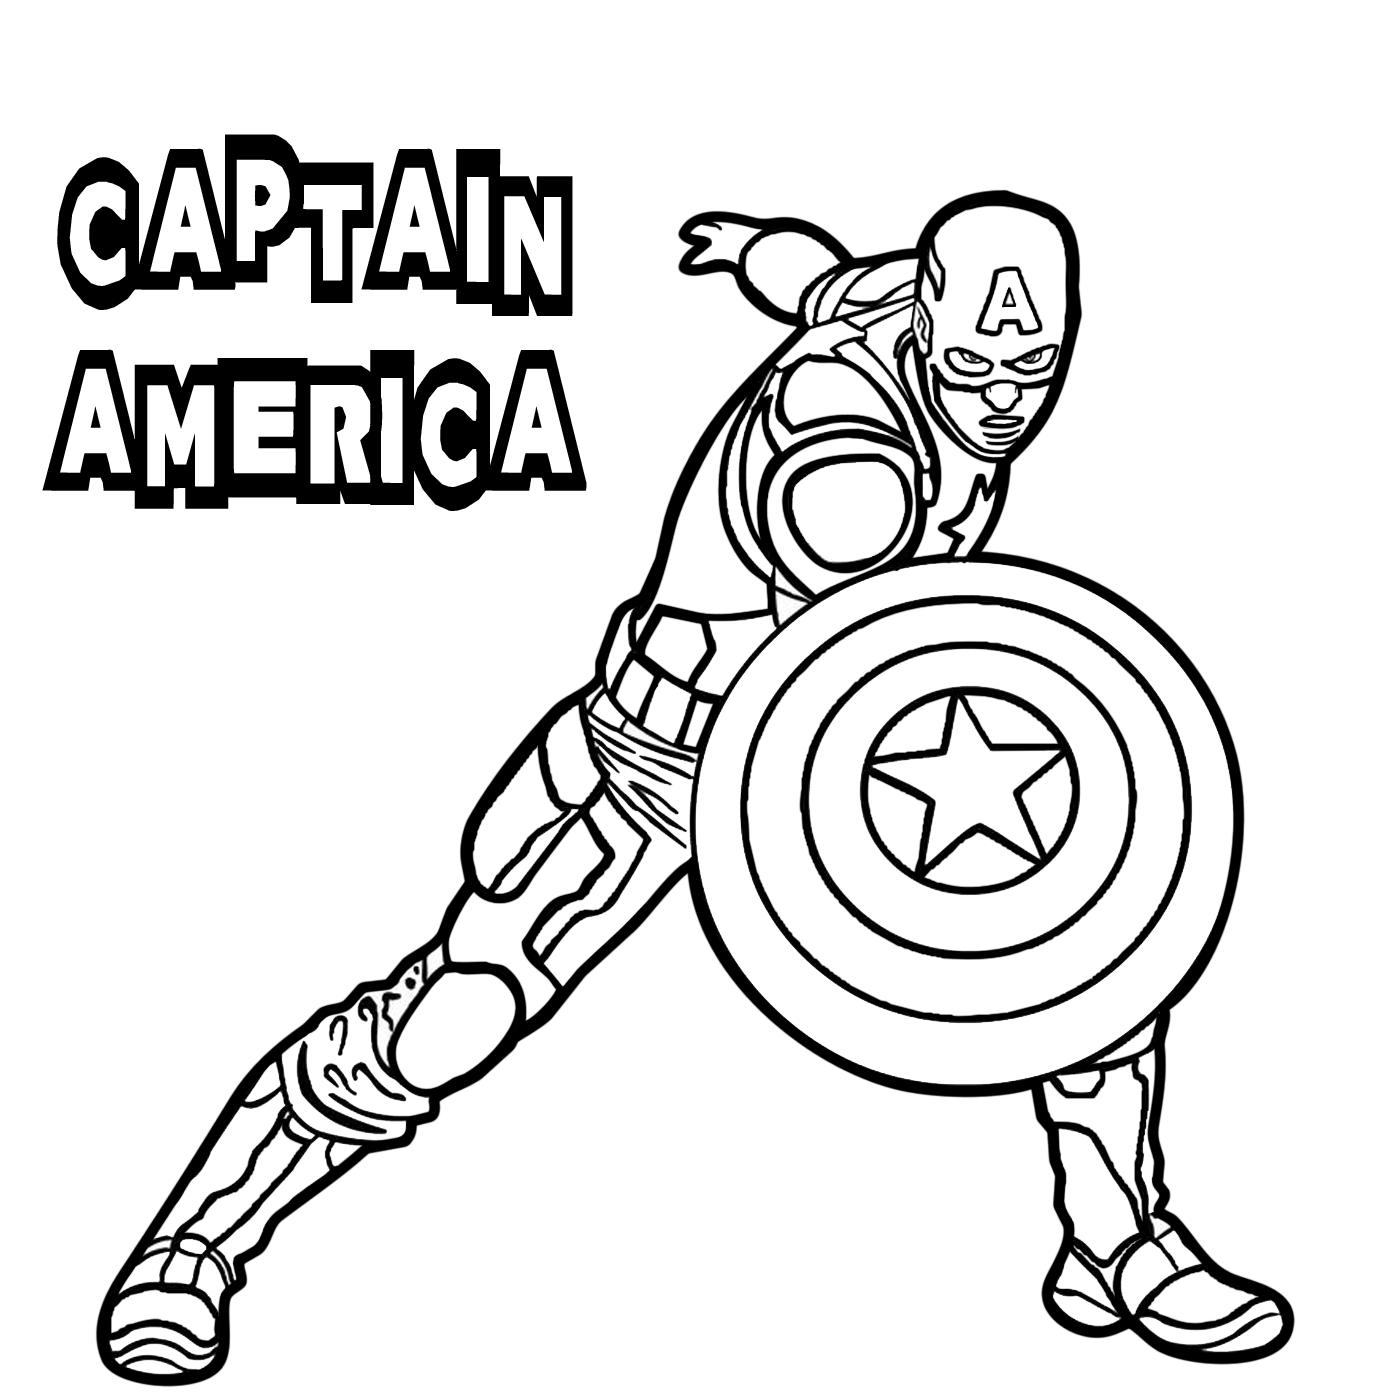 Капитан Америка для печати на стенгазету